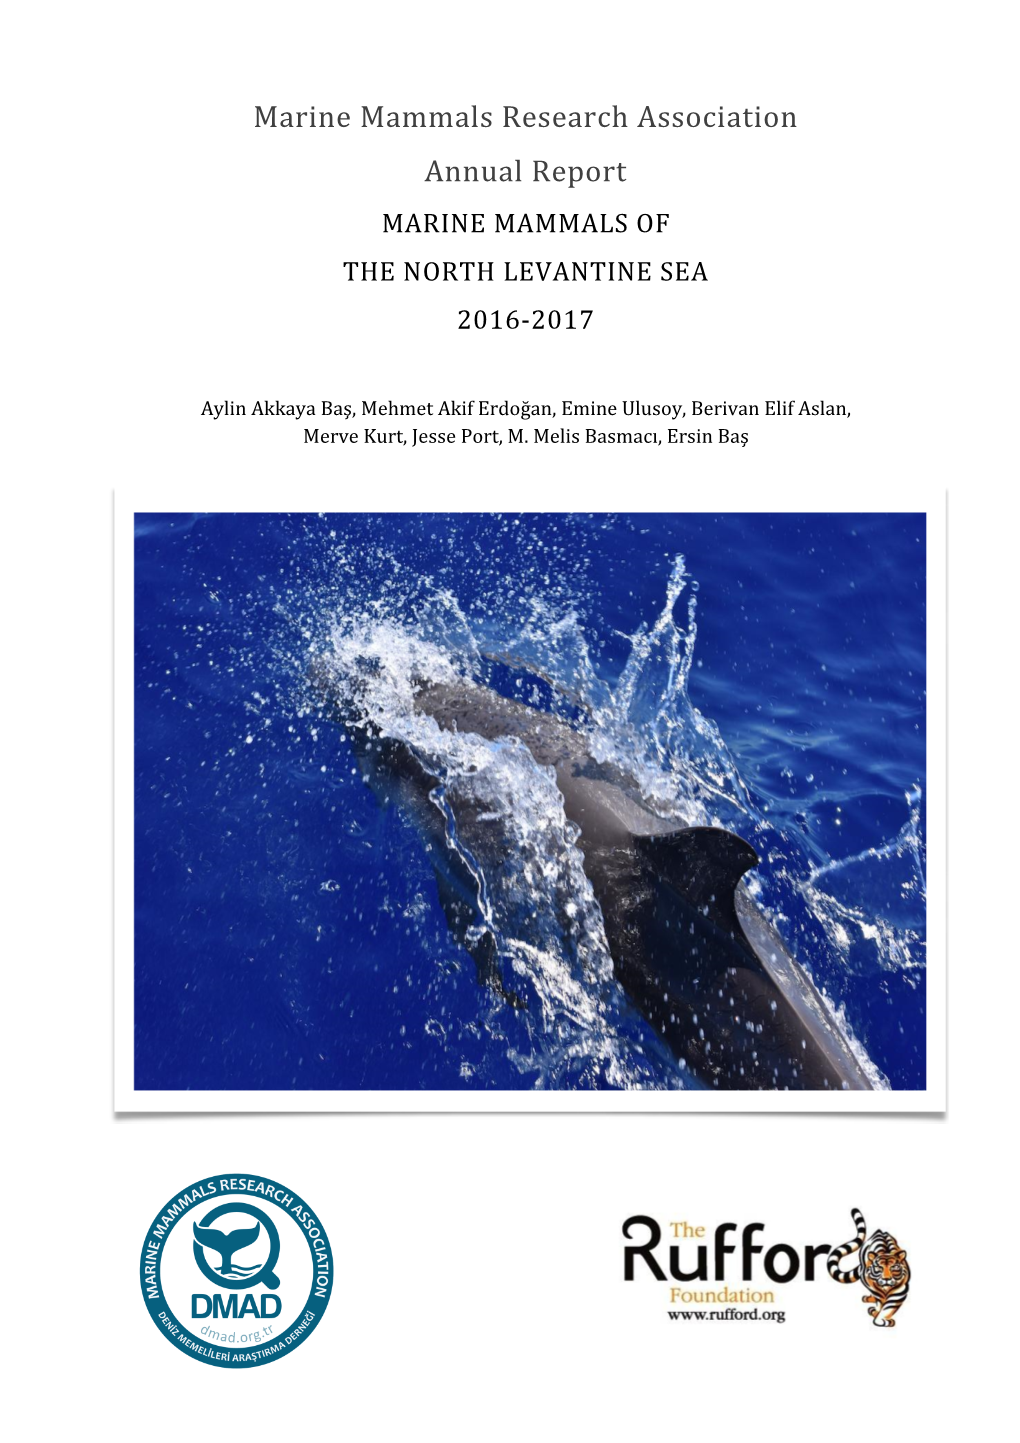 Marine Mammals Research Association Annual Report MARINE MAMMALS of the NORTH LEVANTINE SEA 2016-2017